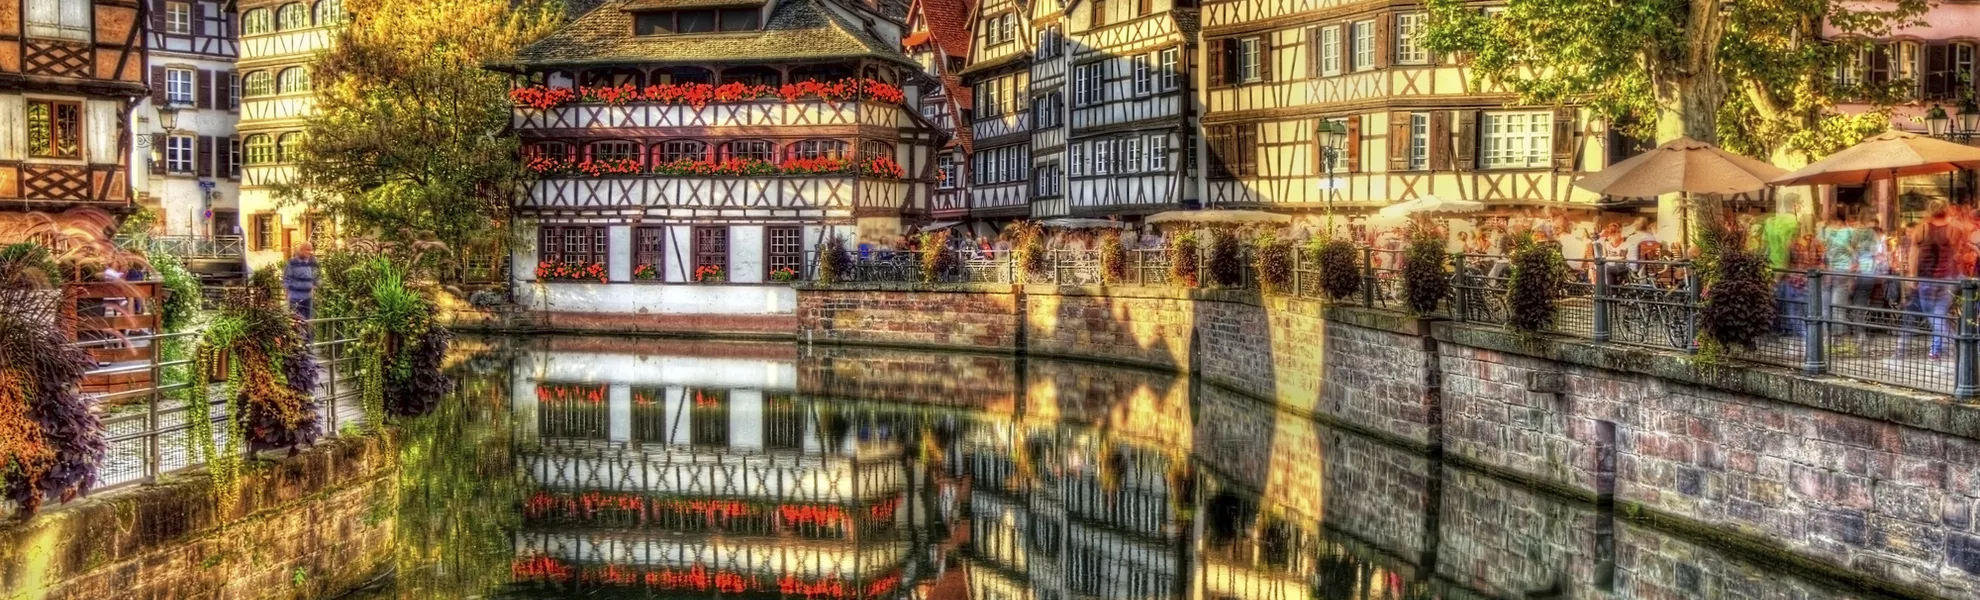 Strasbourg - © Getty Images/iStockphoto